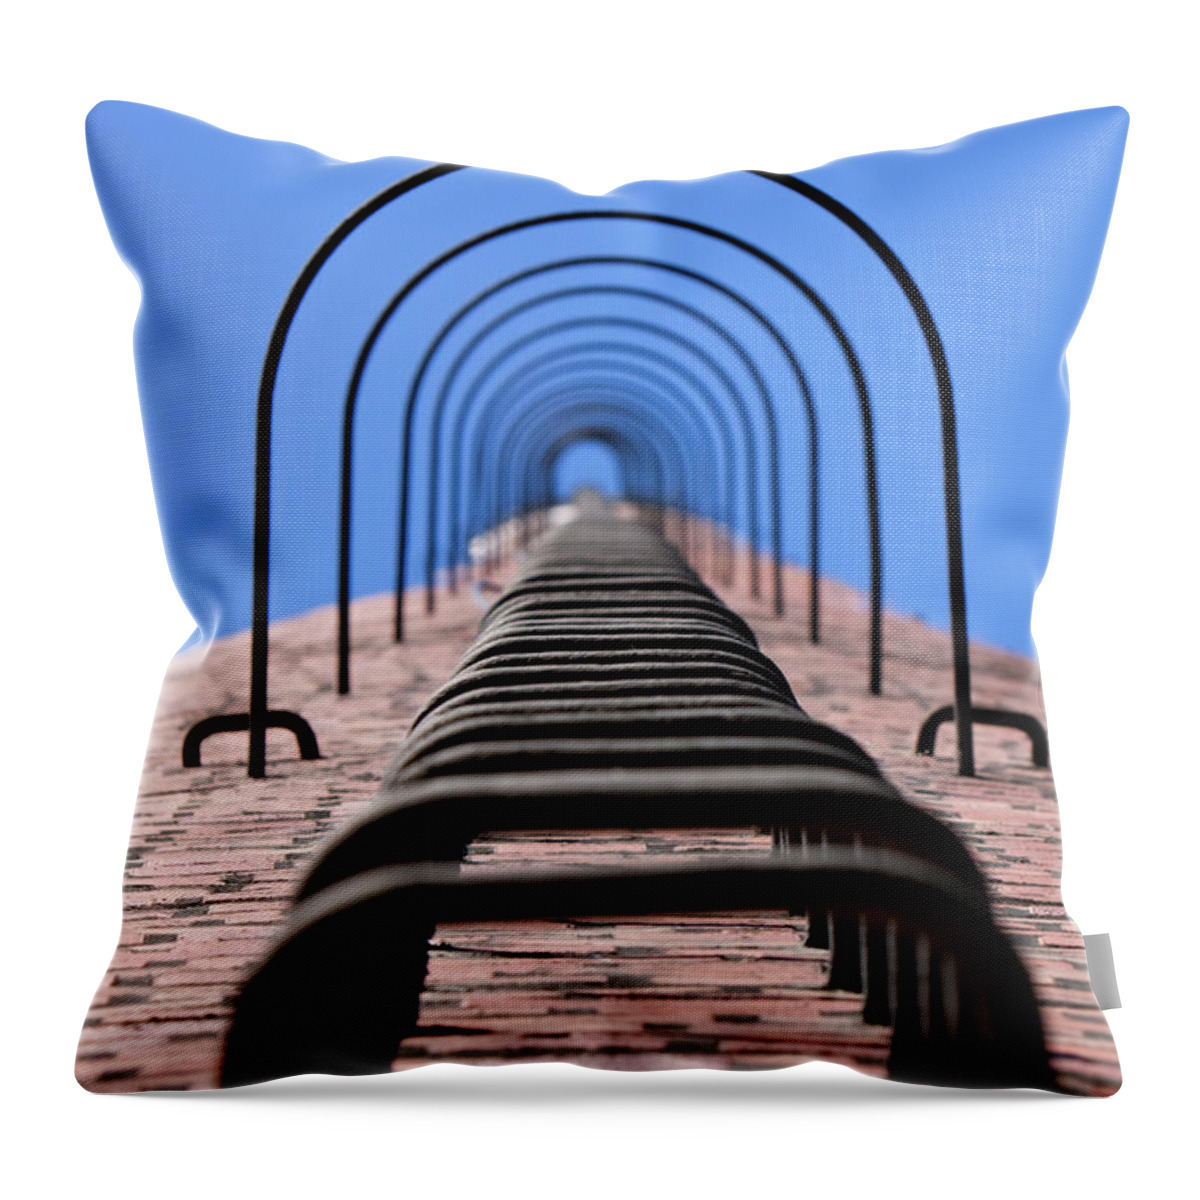 Bauwerke Throw Pillow featuring the photograph Chimney by Joerg Lingnau